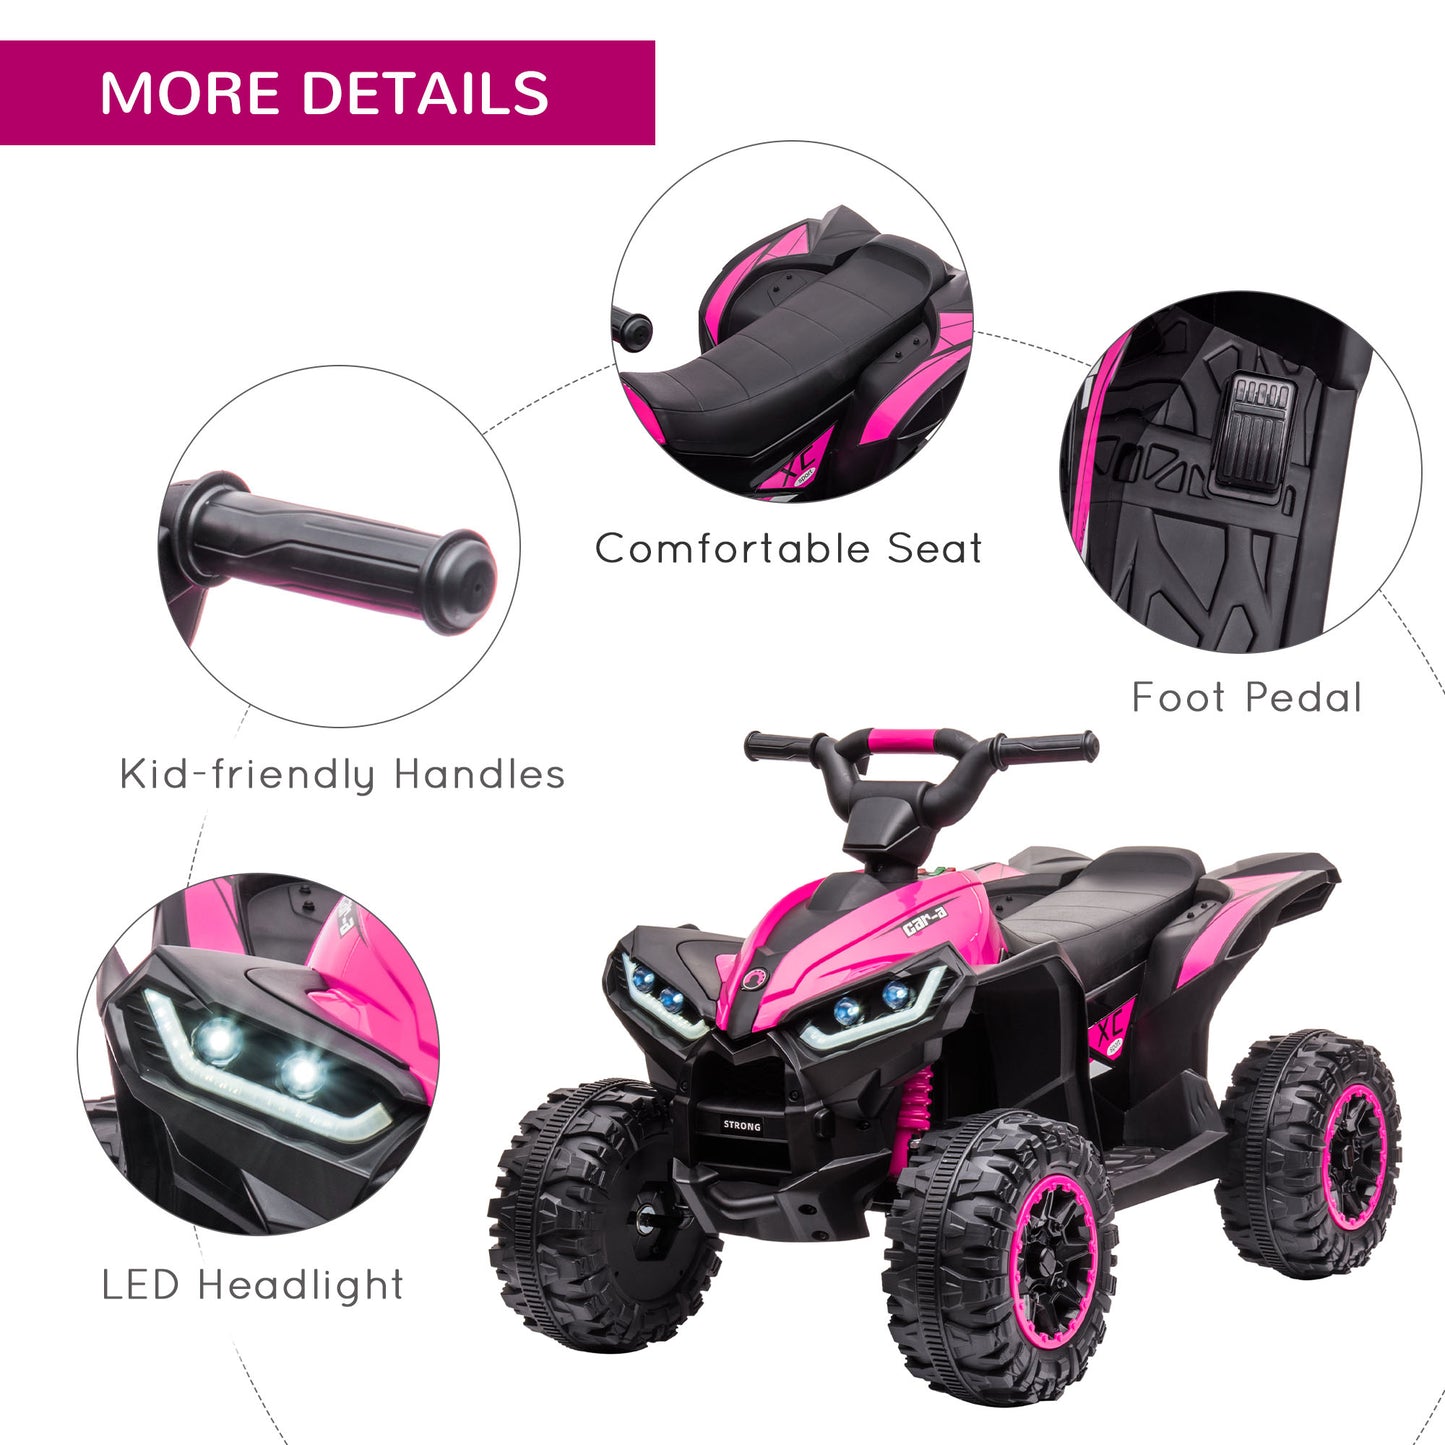 HOMCOM 12V Quad Bike with Forward Reverse Functions, Ride on Car ATV Toy Pink